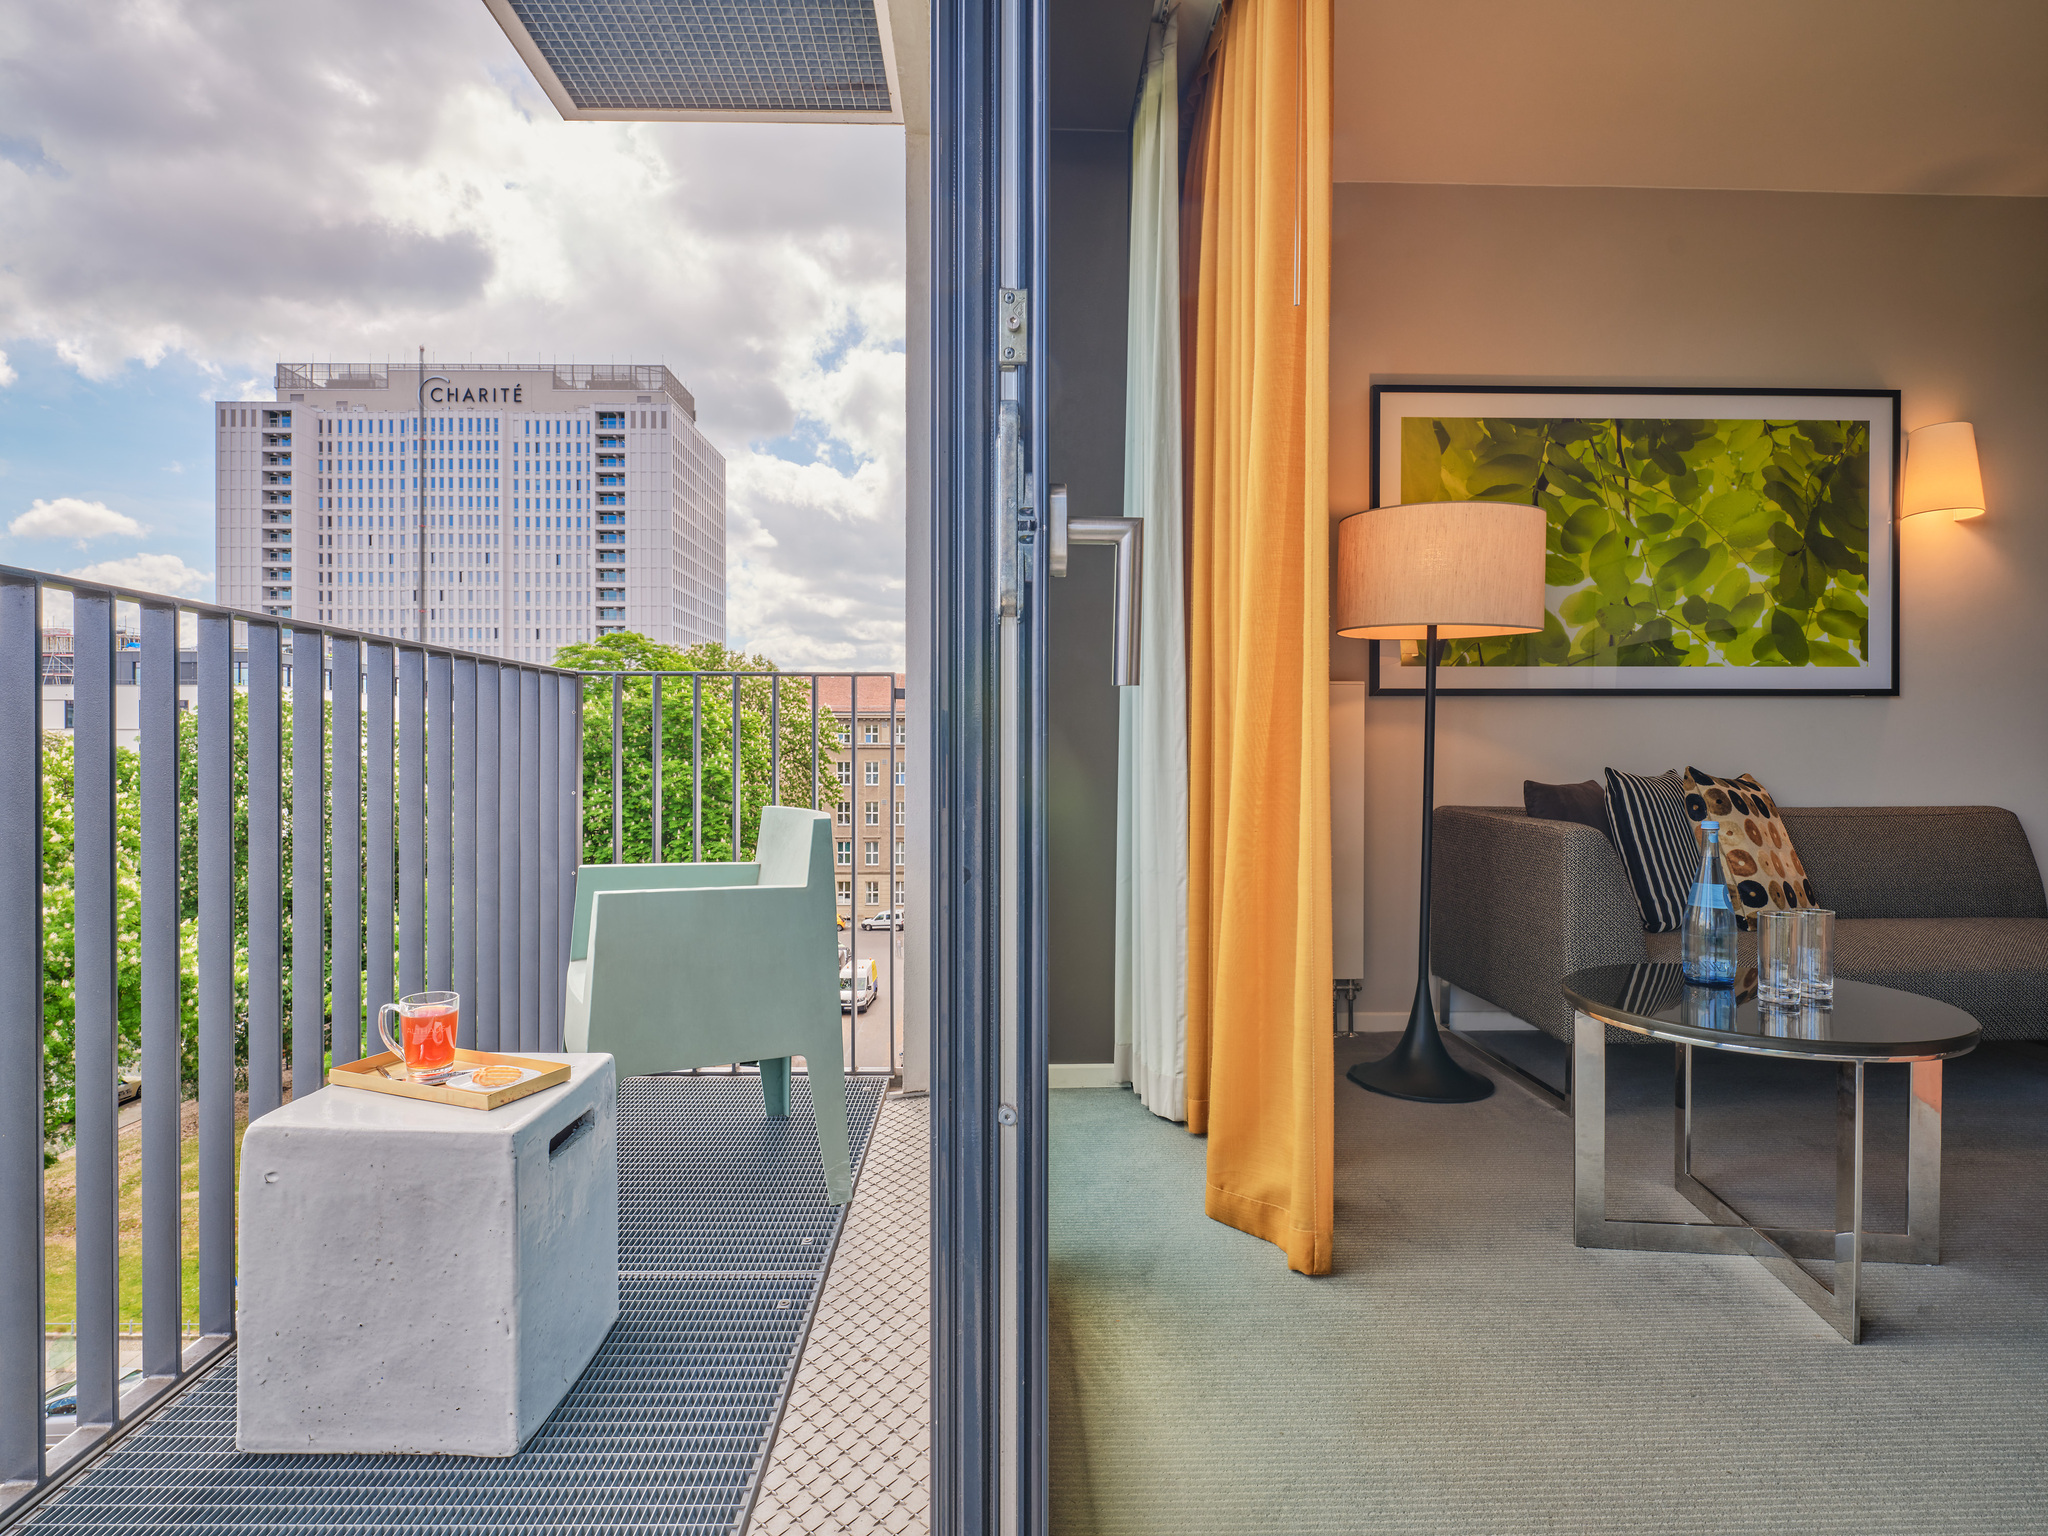 Adina Berlin Mitte - Apartment - ©Adina Hotels Europe